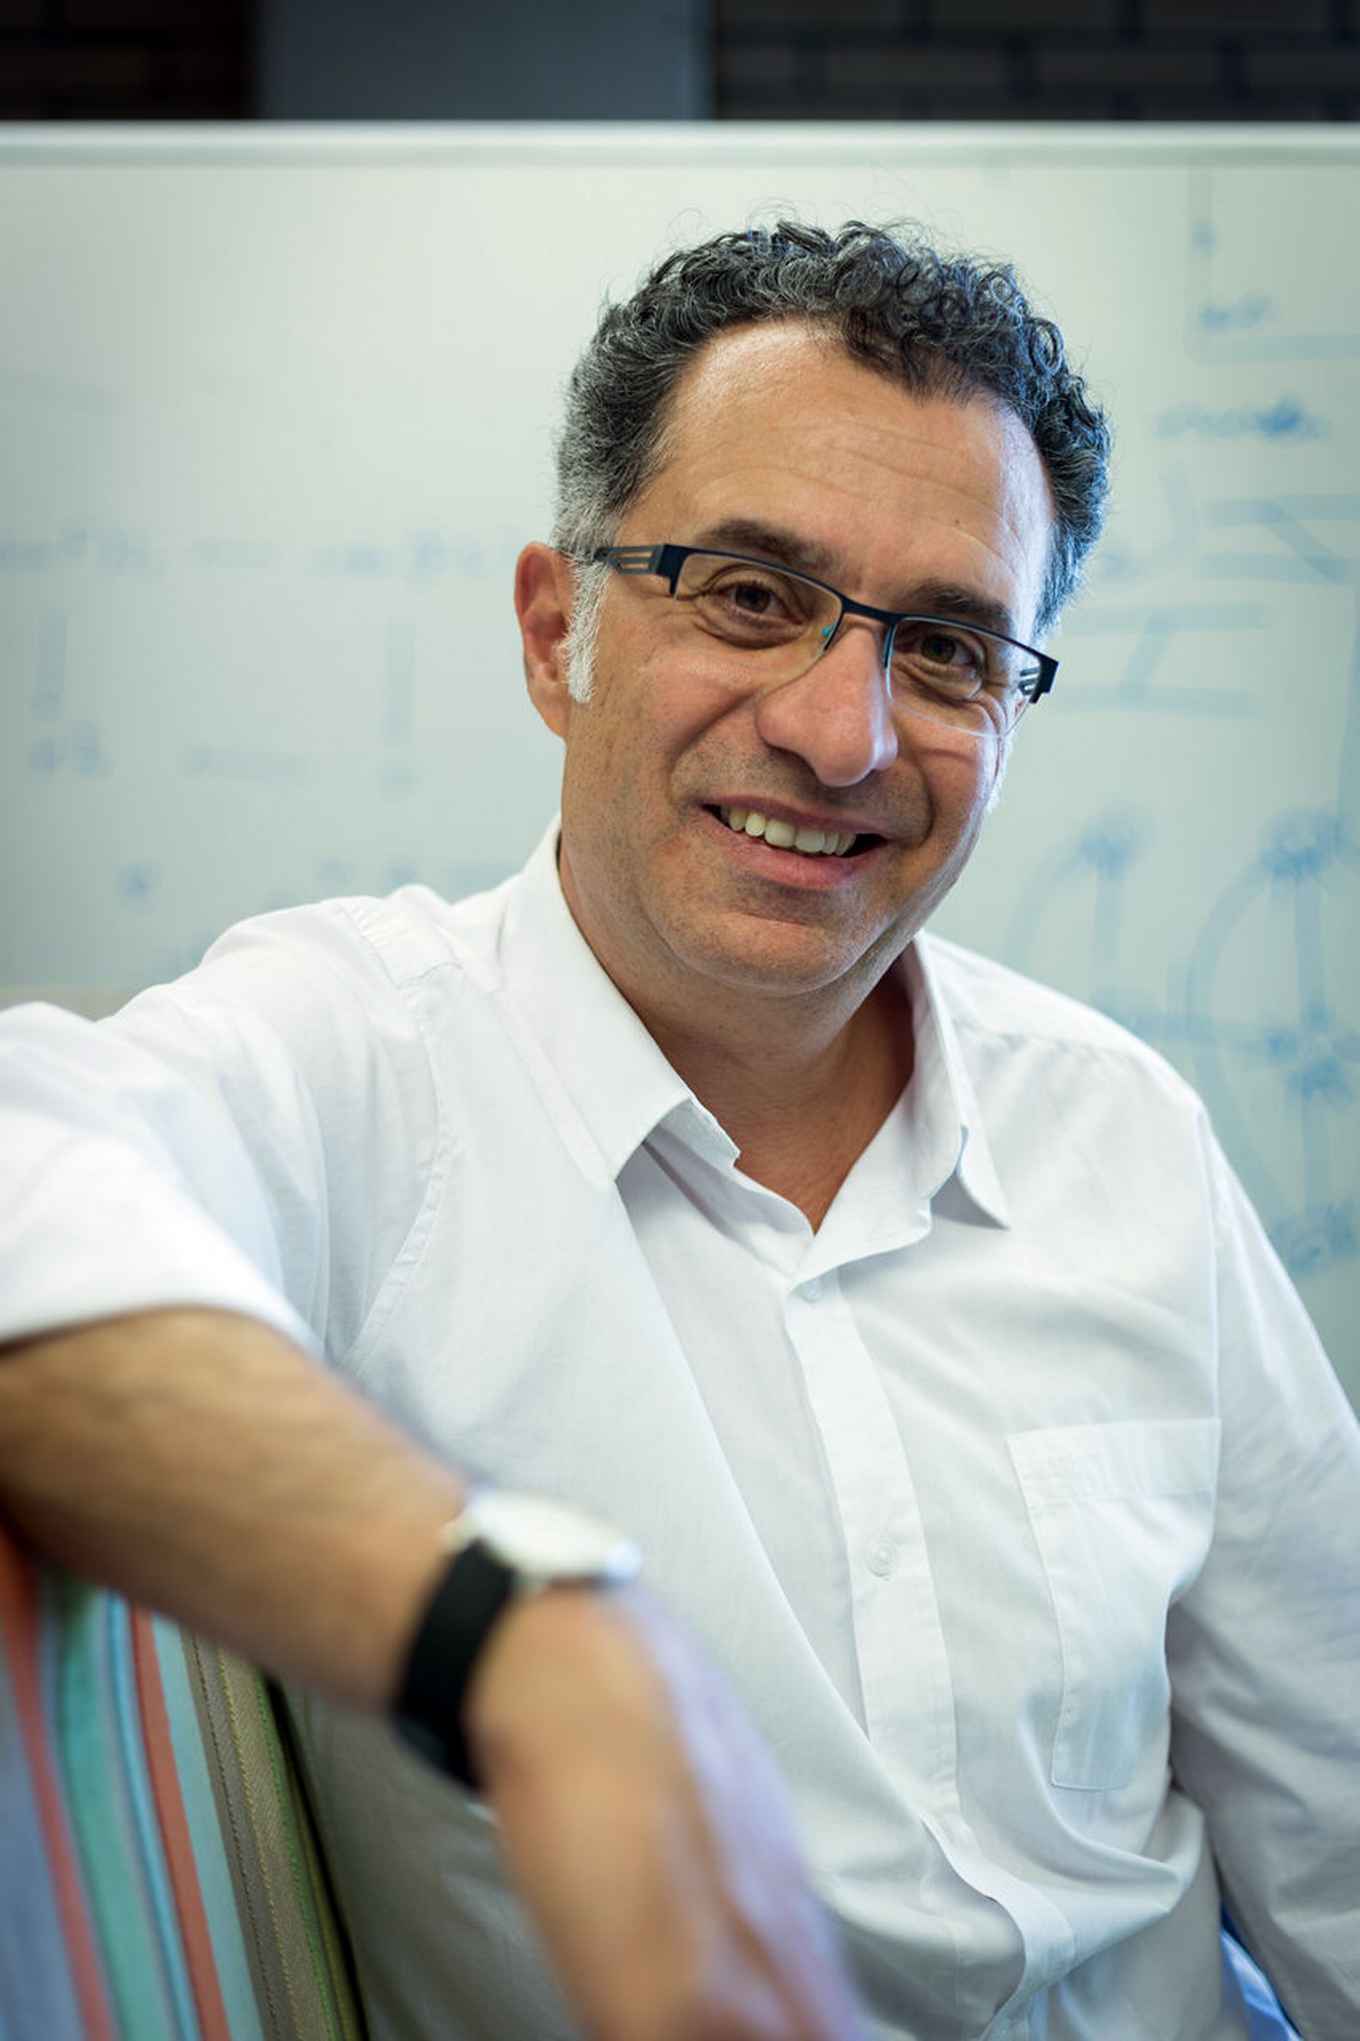 dhr. prof. dr. Khalil Sima'an, hoogleraar FNWI, Computational Linguistics